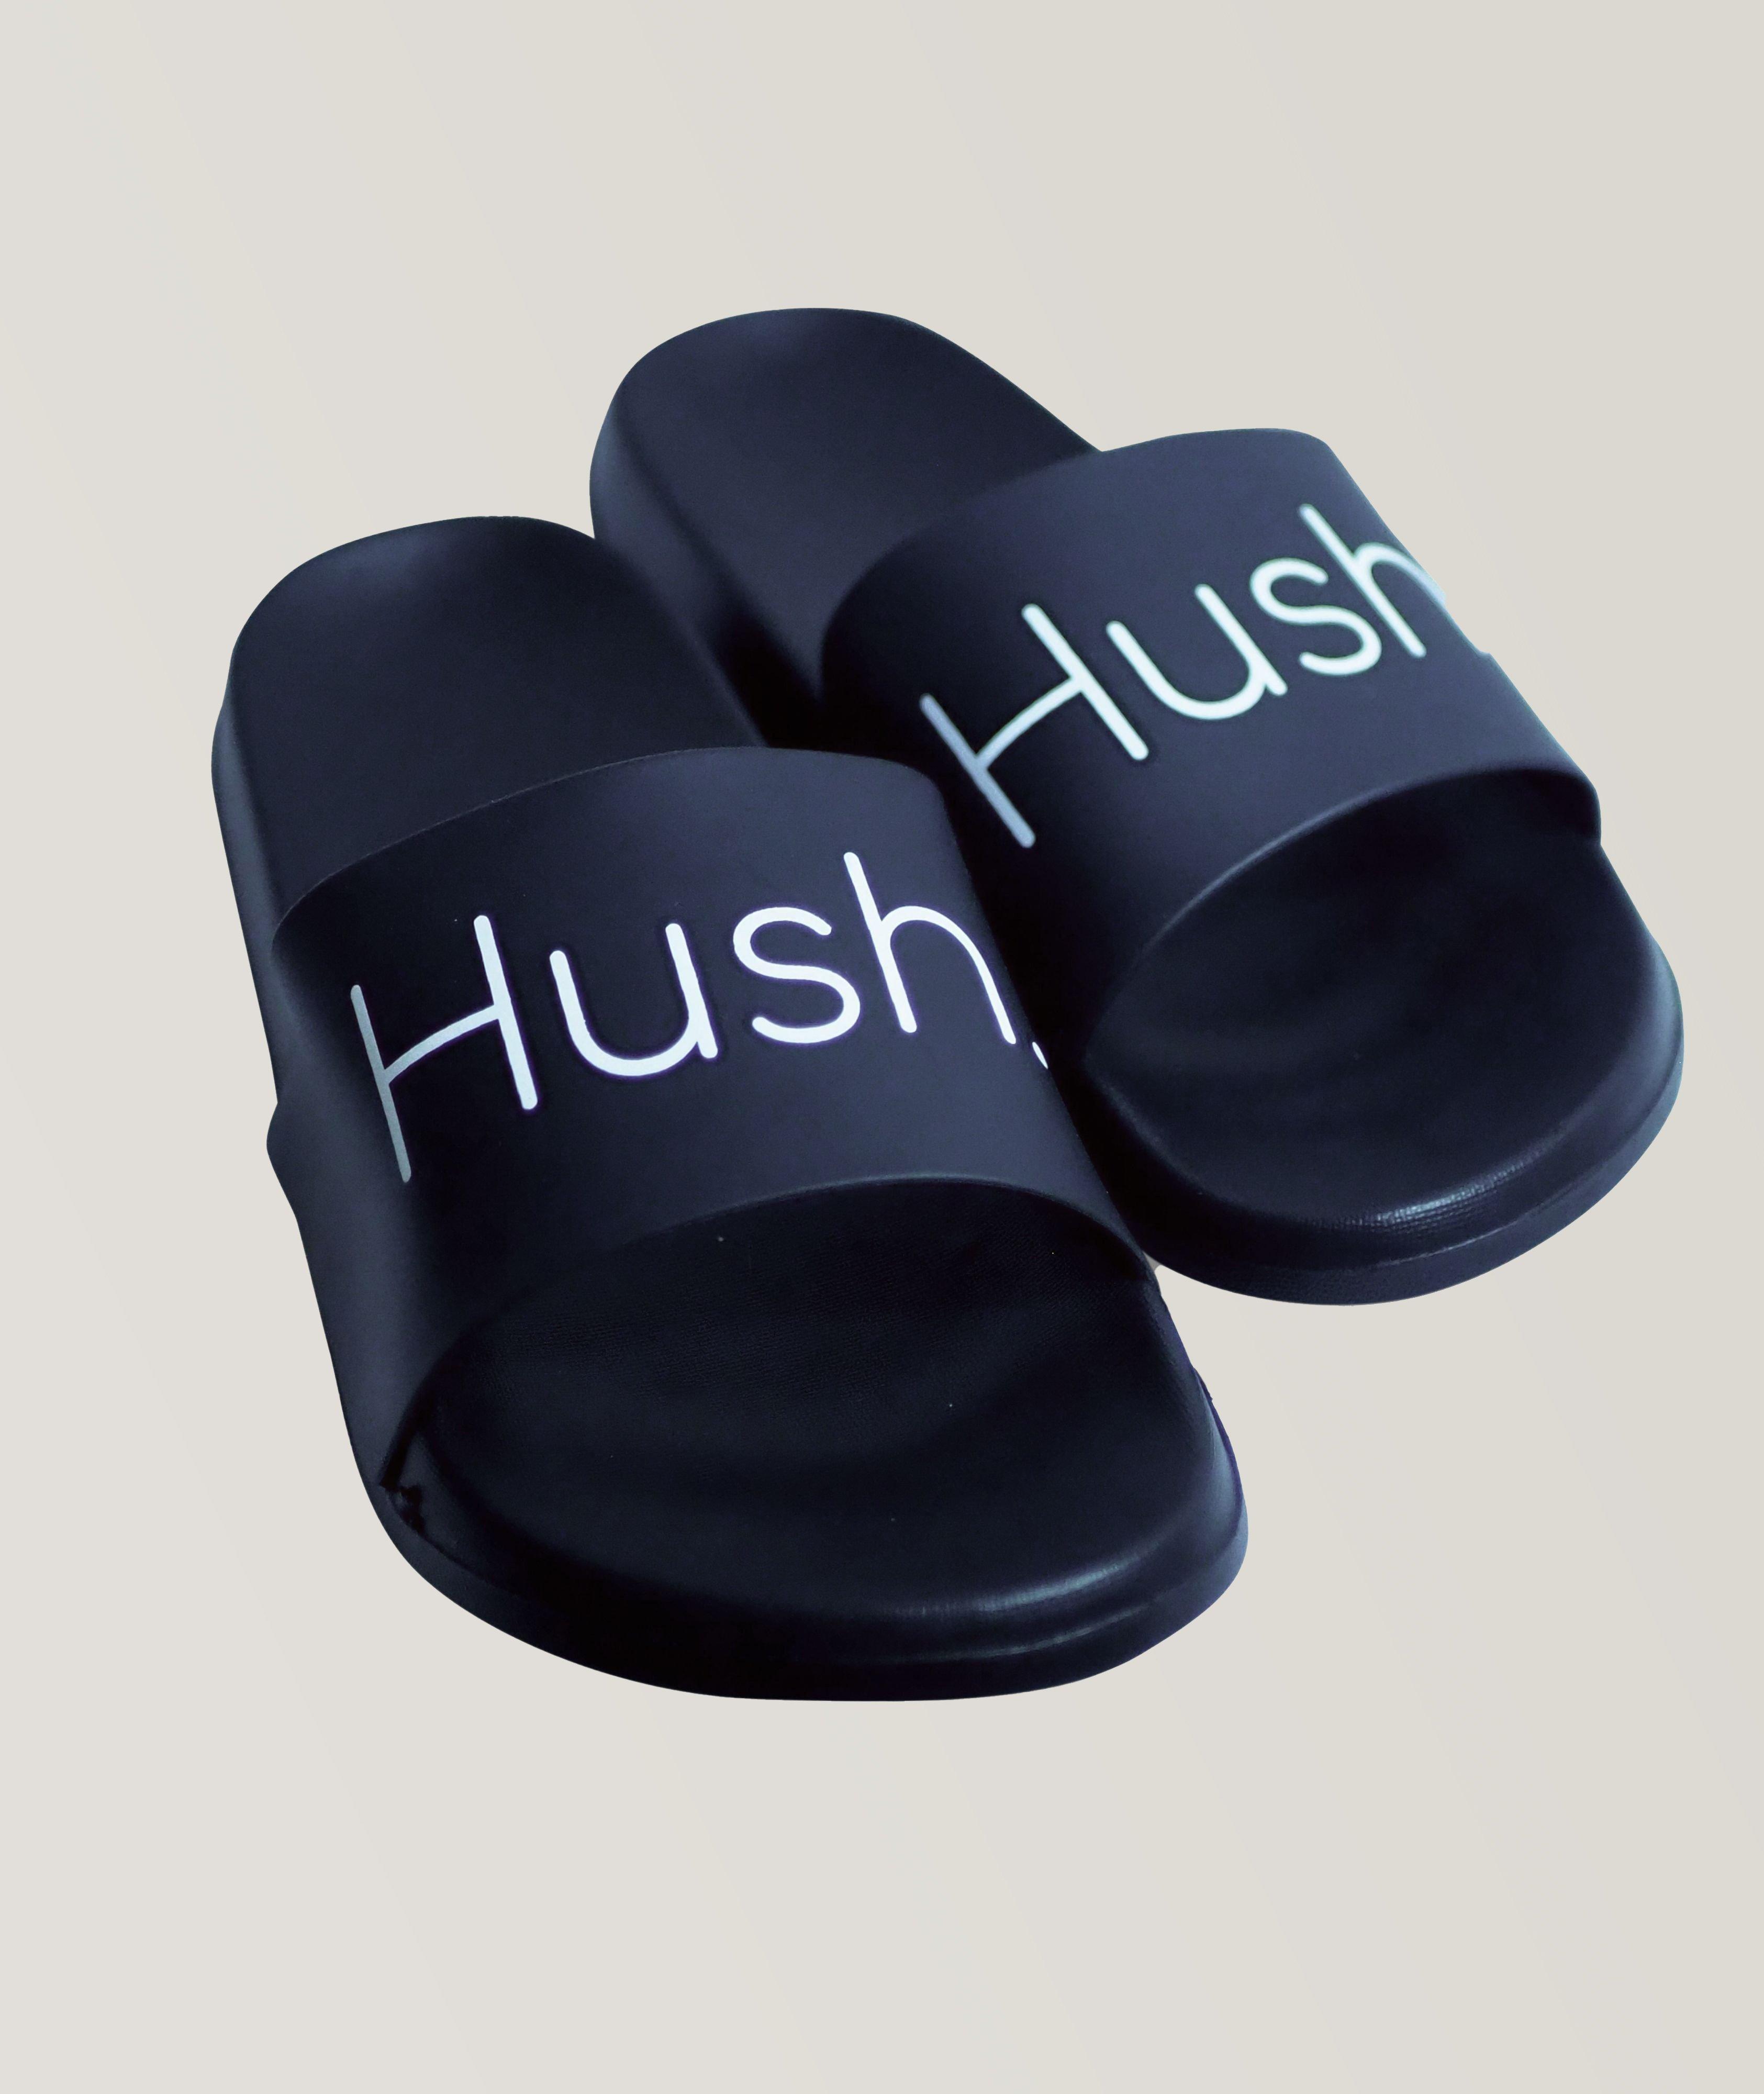 Hush Slides image 0